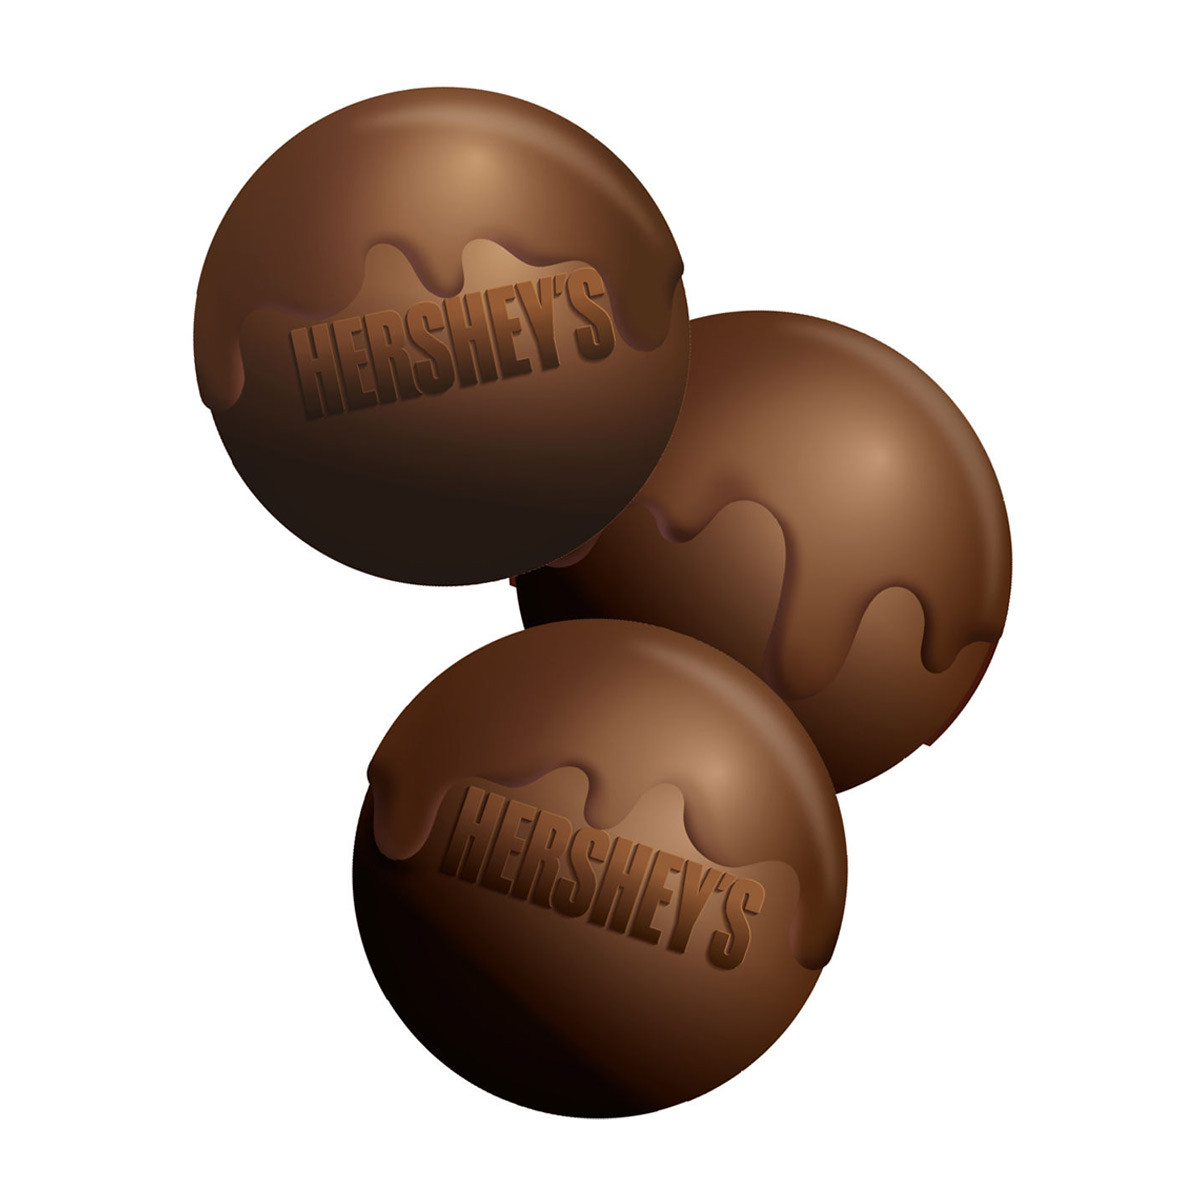 Hershey's Hot Chocolate Bomb With Mini Marshmallows - Melting